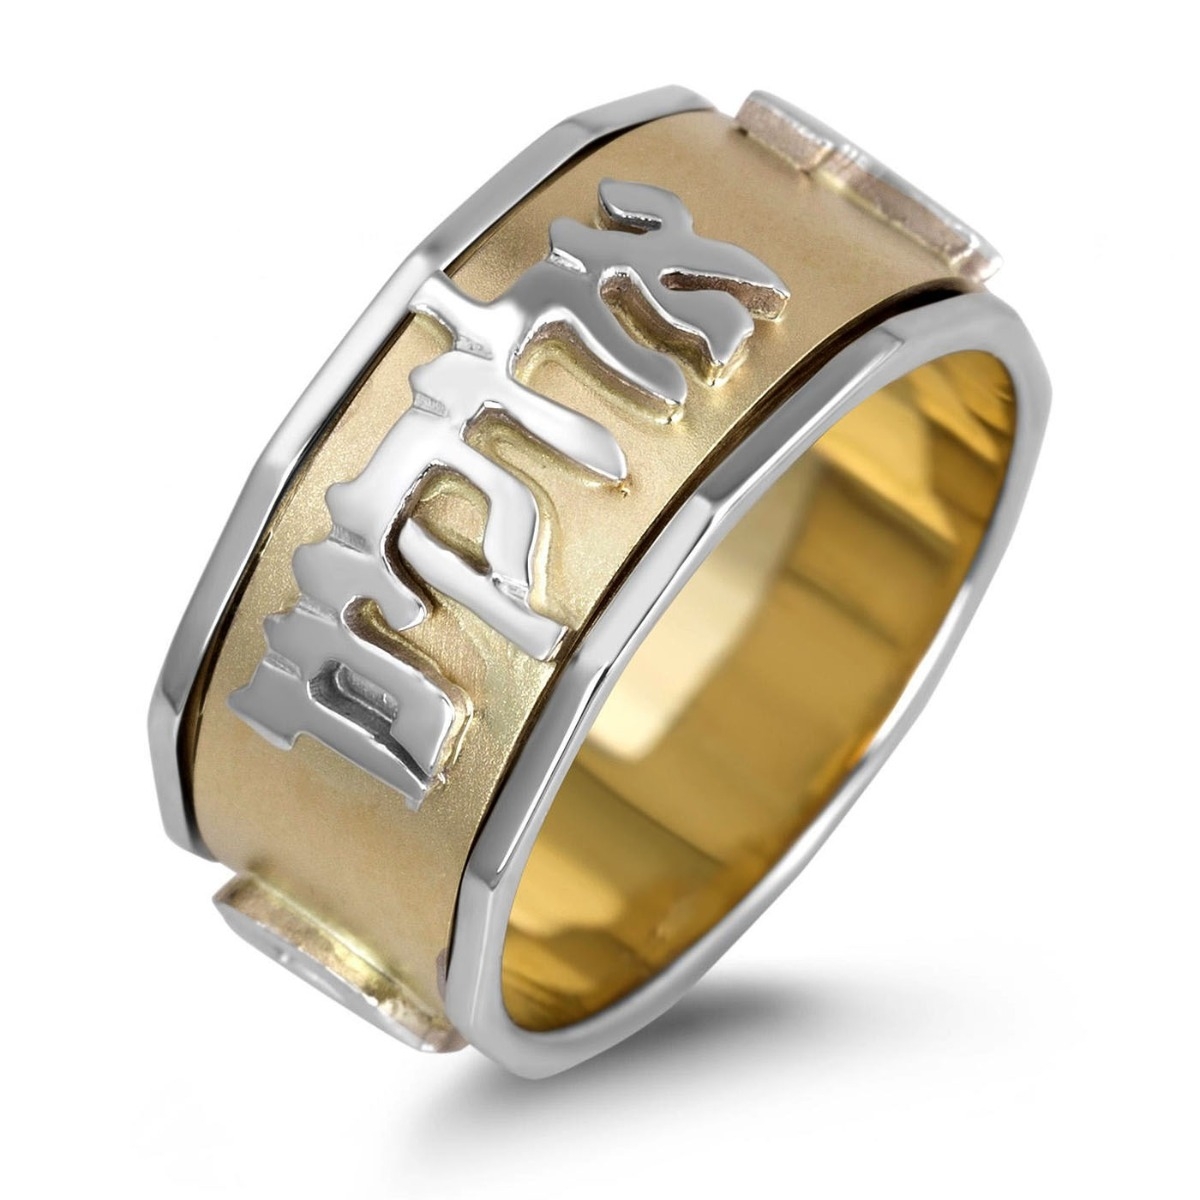 14K White and Yellow Gold Spinner Ring - Shema Yisrael - Deuteronomy 6:4 - 1